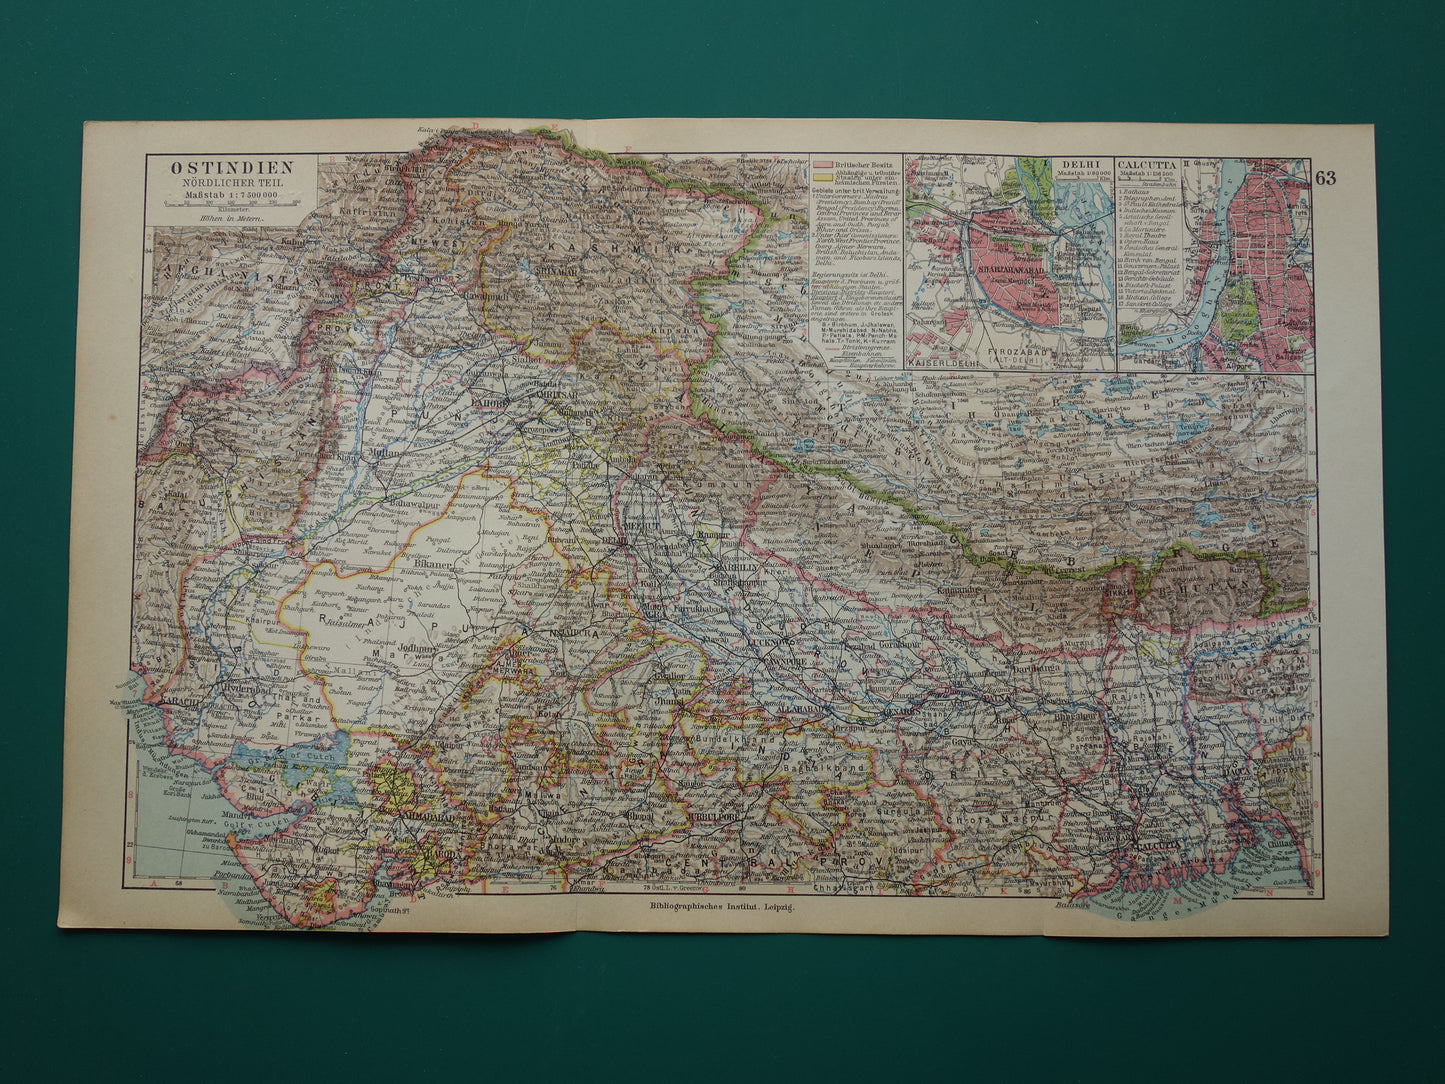 INDIA oude landkaart van noord-India Delhi Calcutta Kolkata Nepal Kashmir 1928 originele vintage kaart